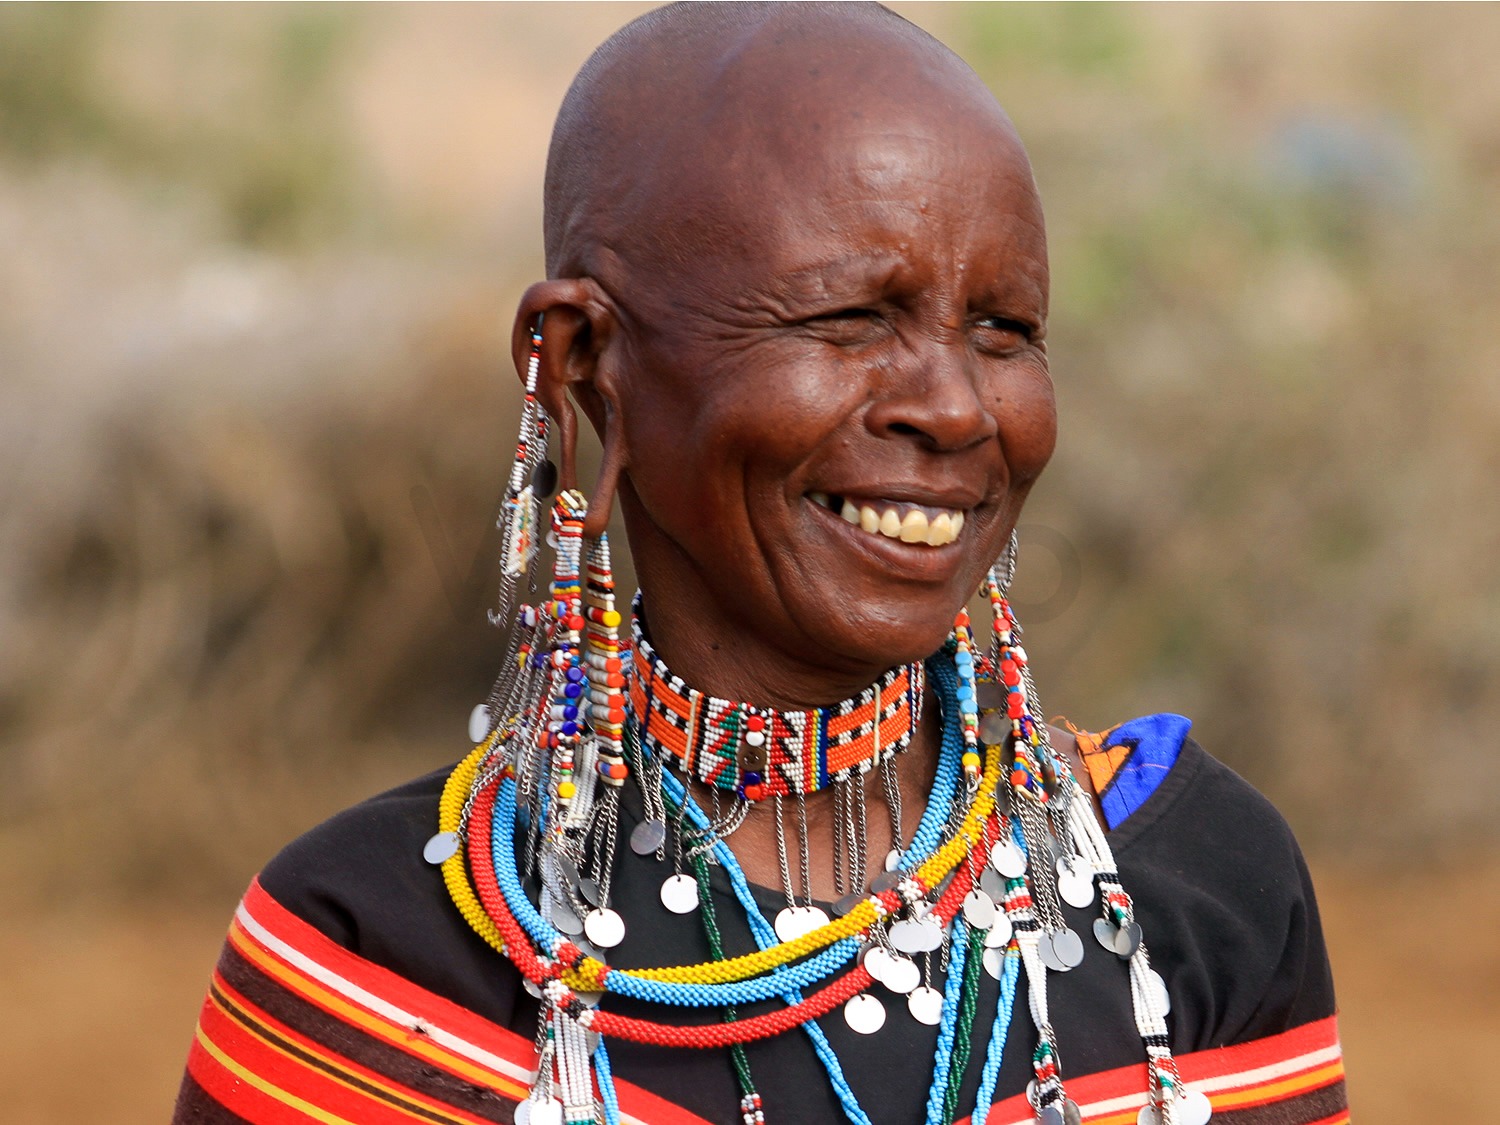 Maasai Woman